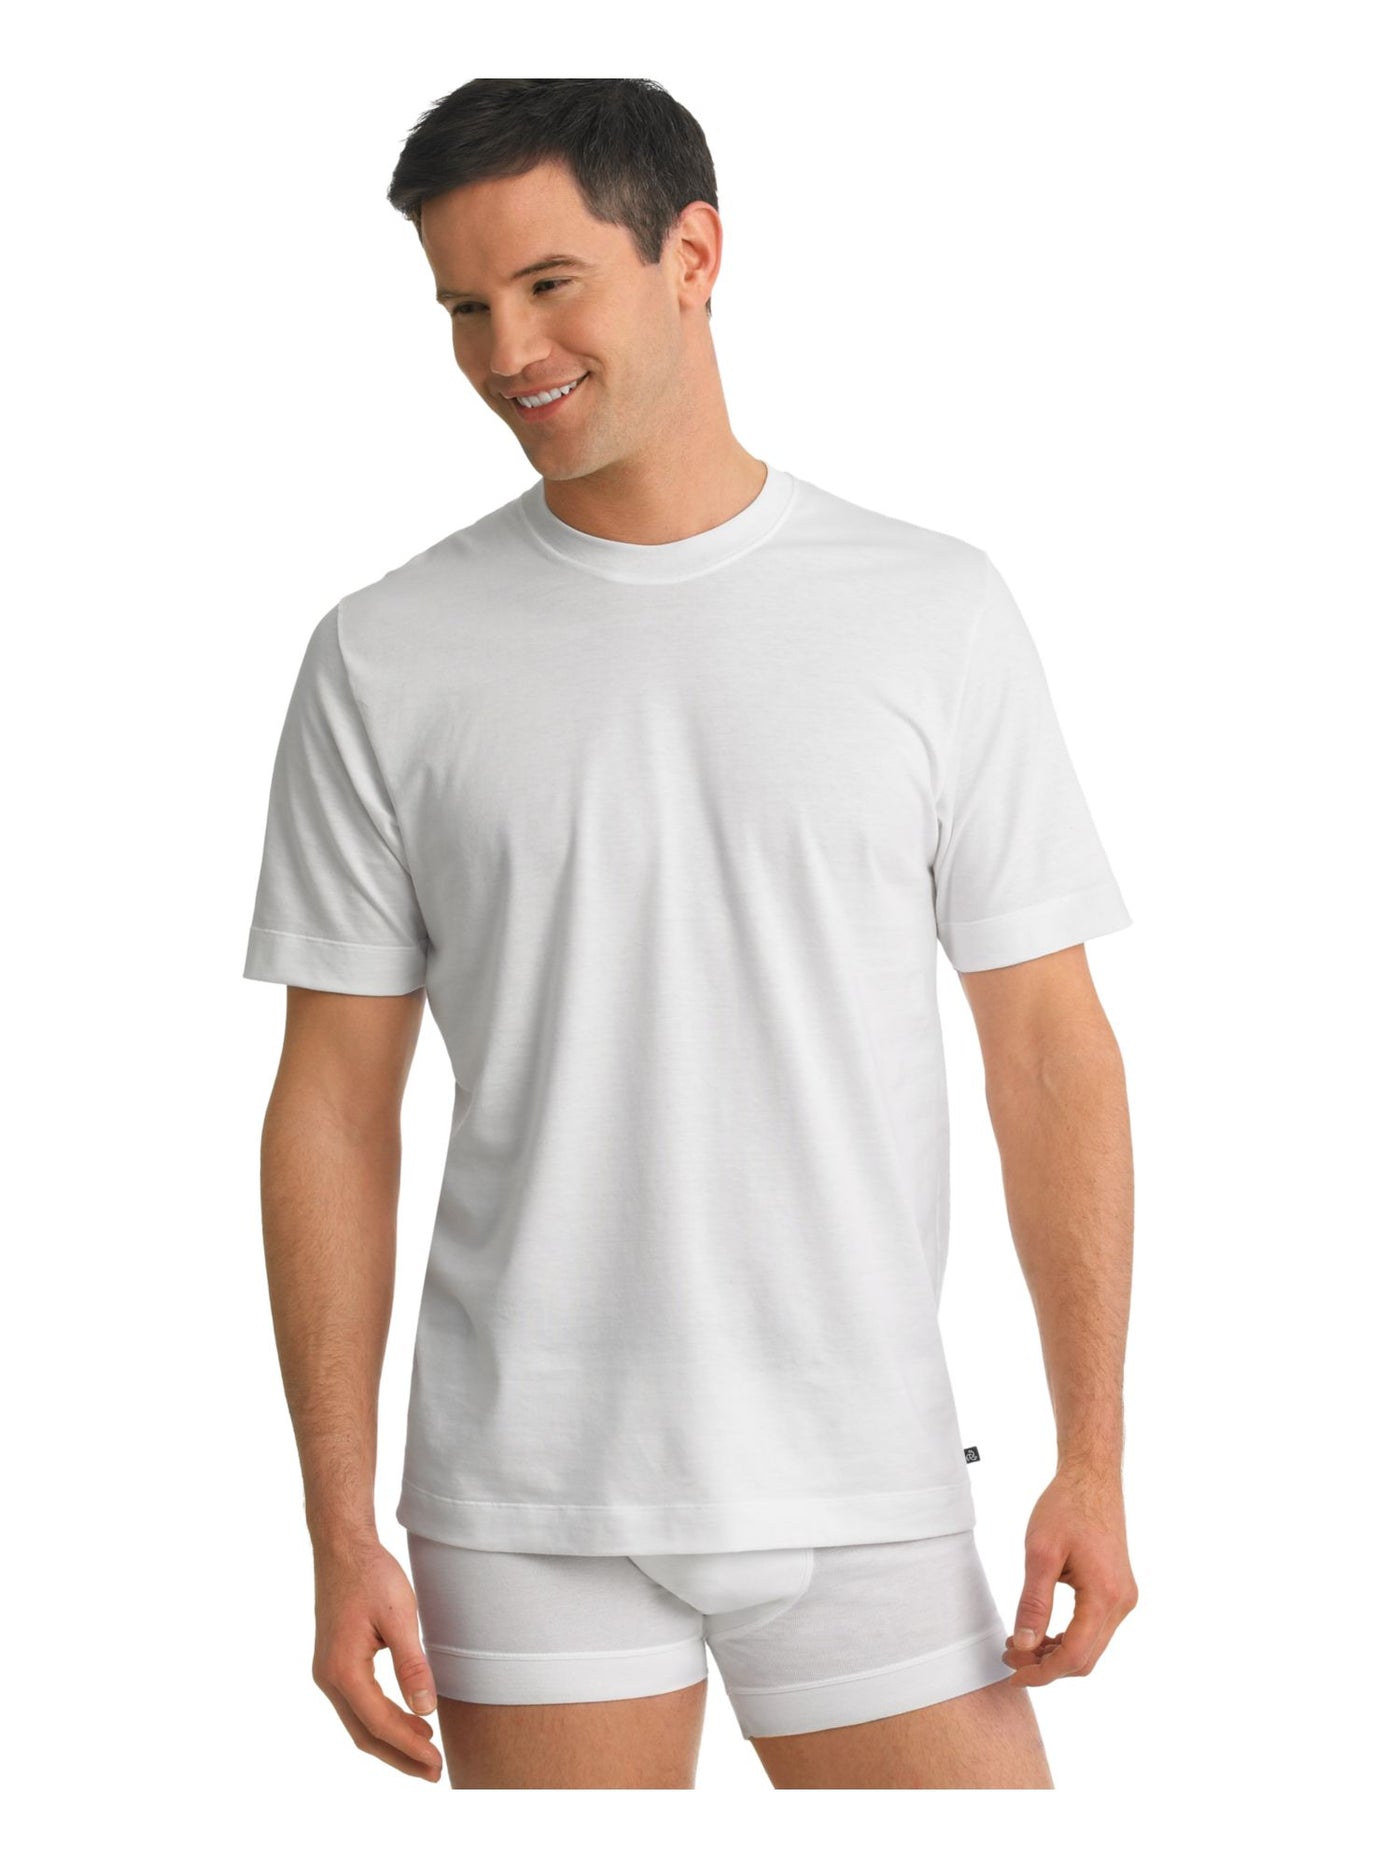 JOCKEY Mens White Short Sleeve Classic Fit T-Shirt XL